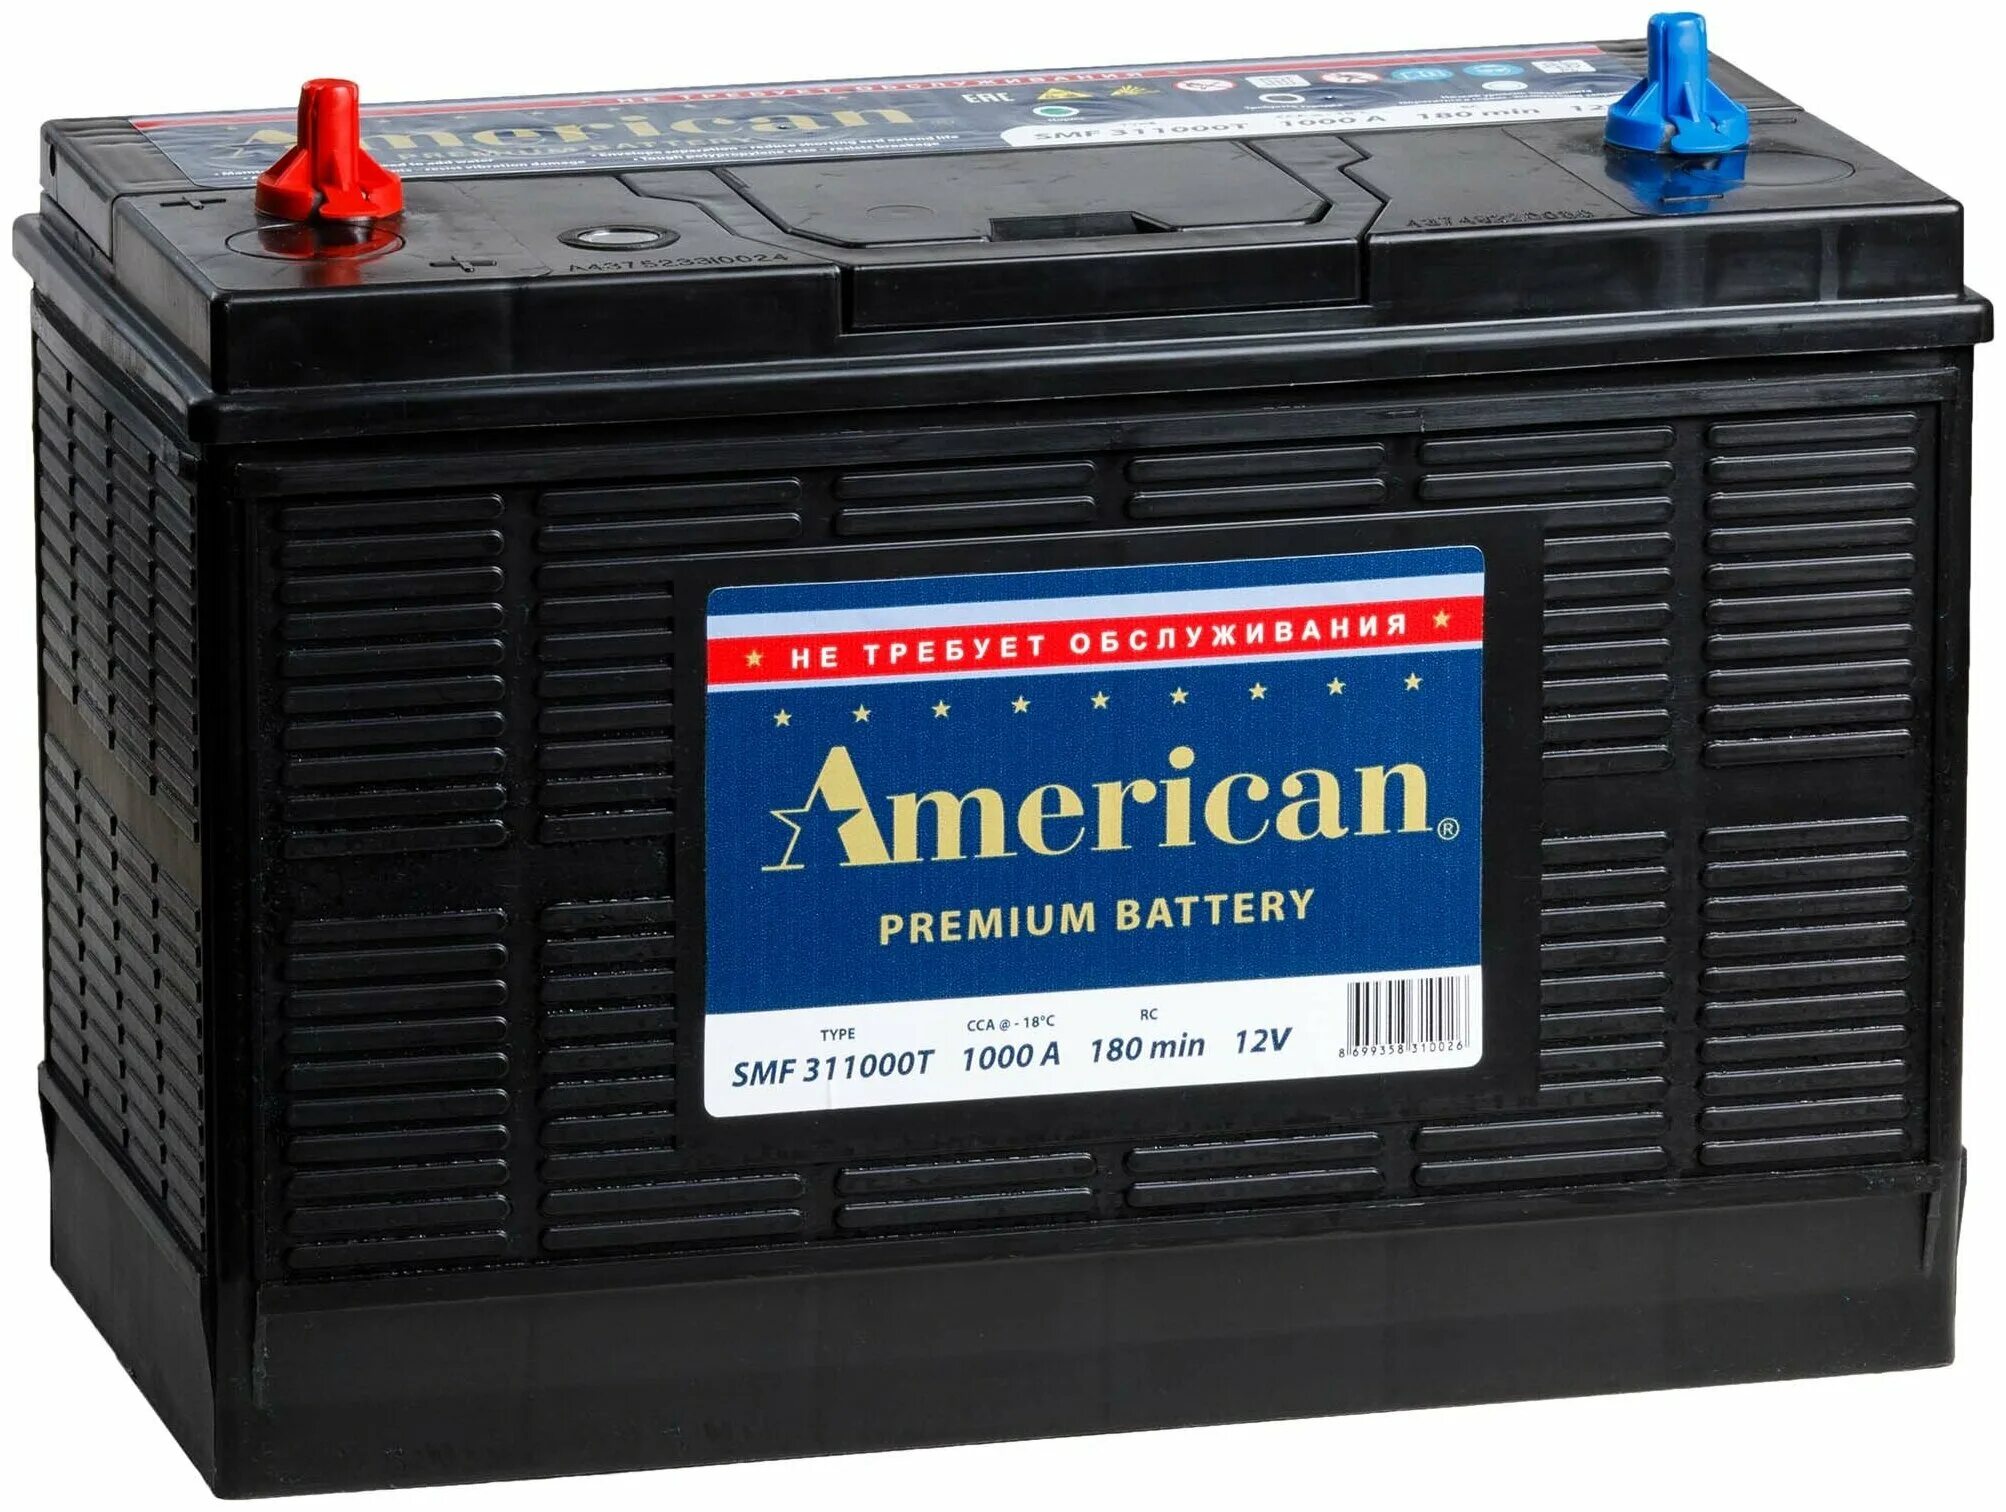 Купить ам аккумулятор. АКБ SMF 311000 American. Аккумулятор American 31-1000. АКБ American 311000t (1000a cca) 140а/ч. АКБ American Premium Battery 12v 31 1000т 1000а.